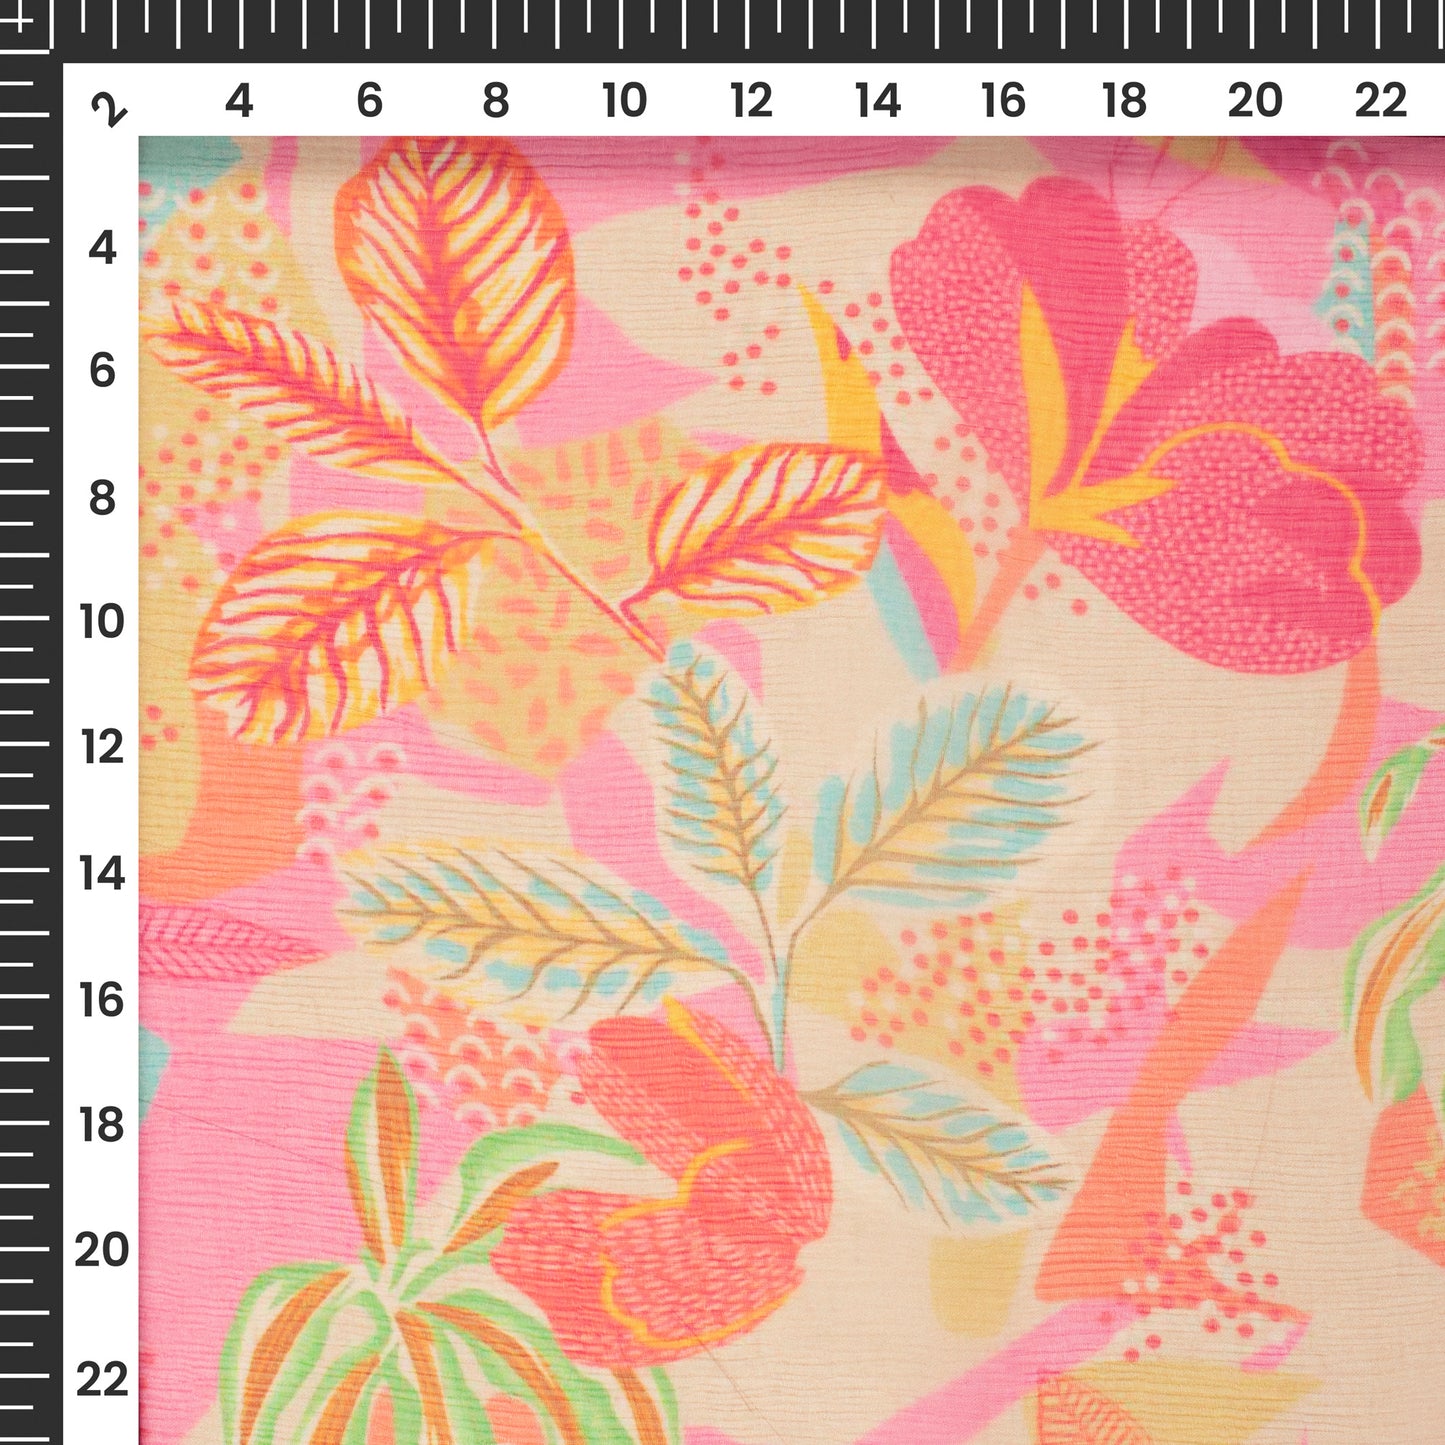 Sheer Sophistication: Floral Digital Print Bemberg Chiffon Fabric